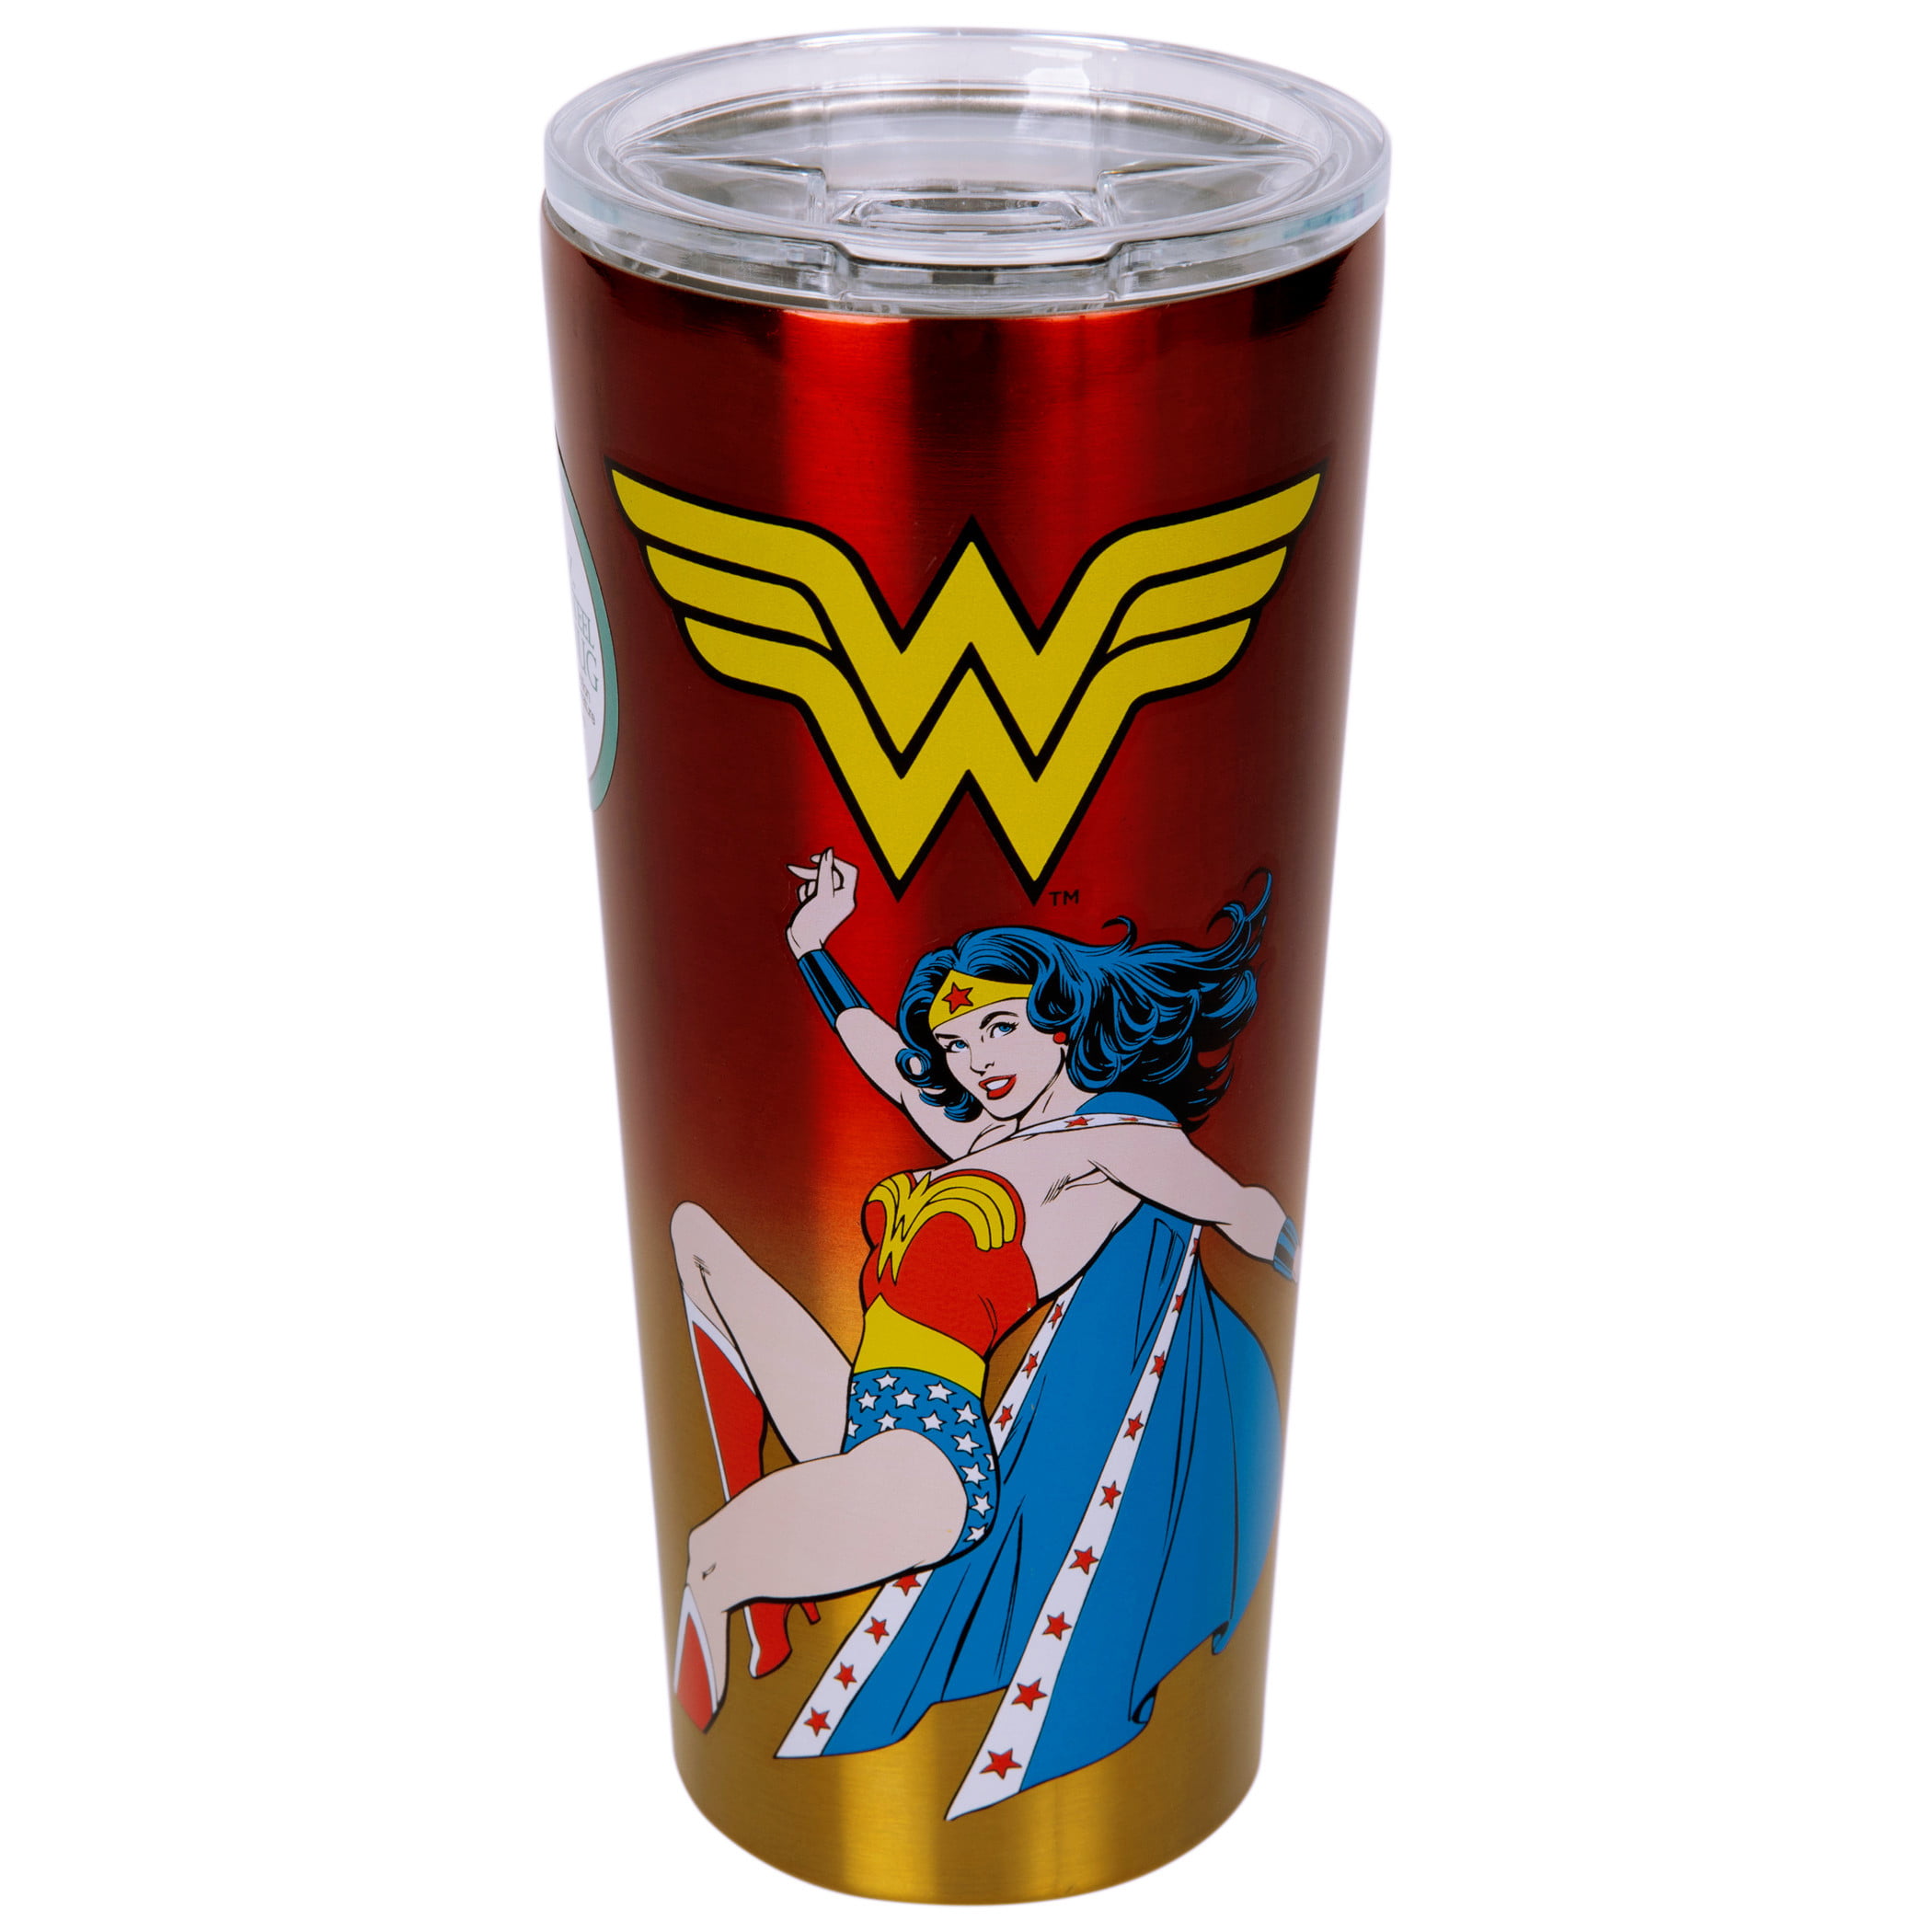 Wonder Woman Travel and Ceramic Mug 2-Pack